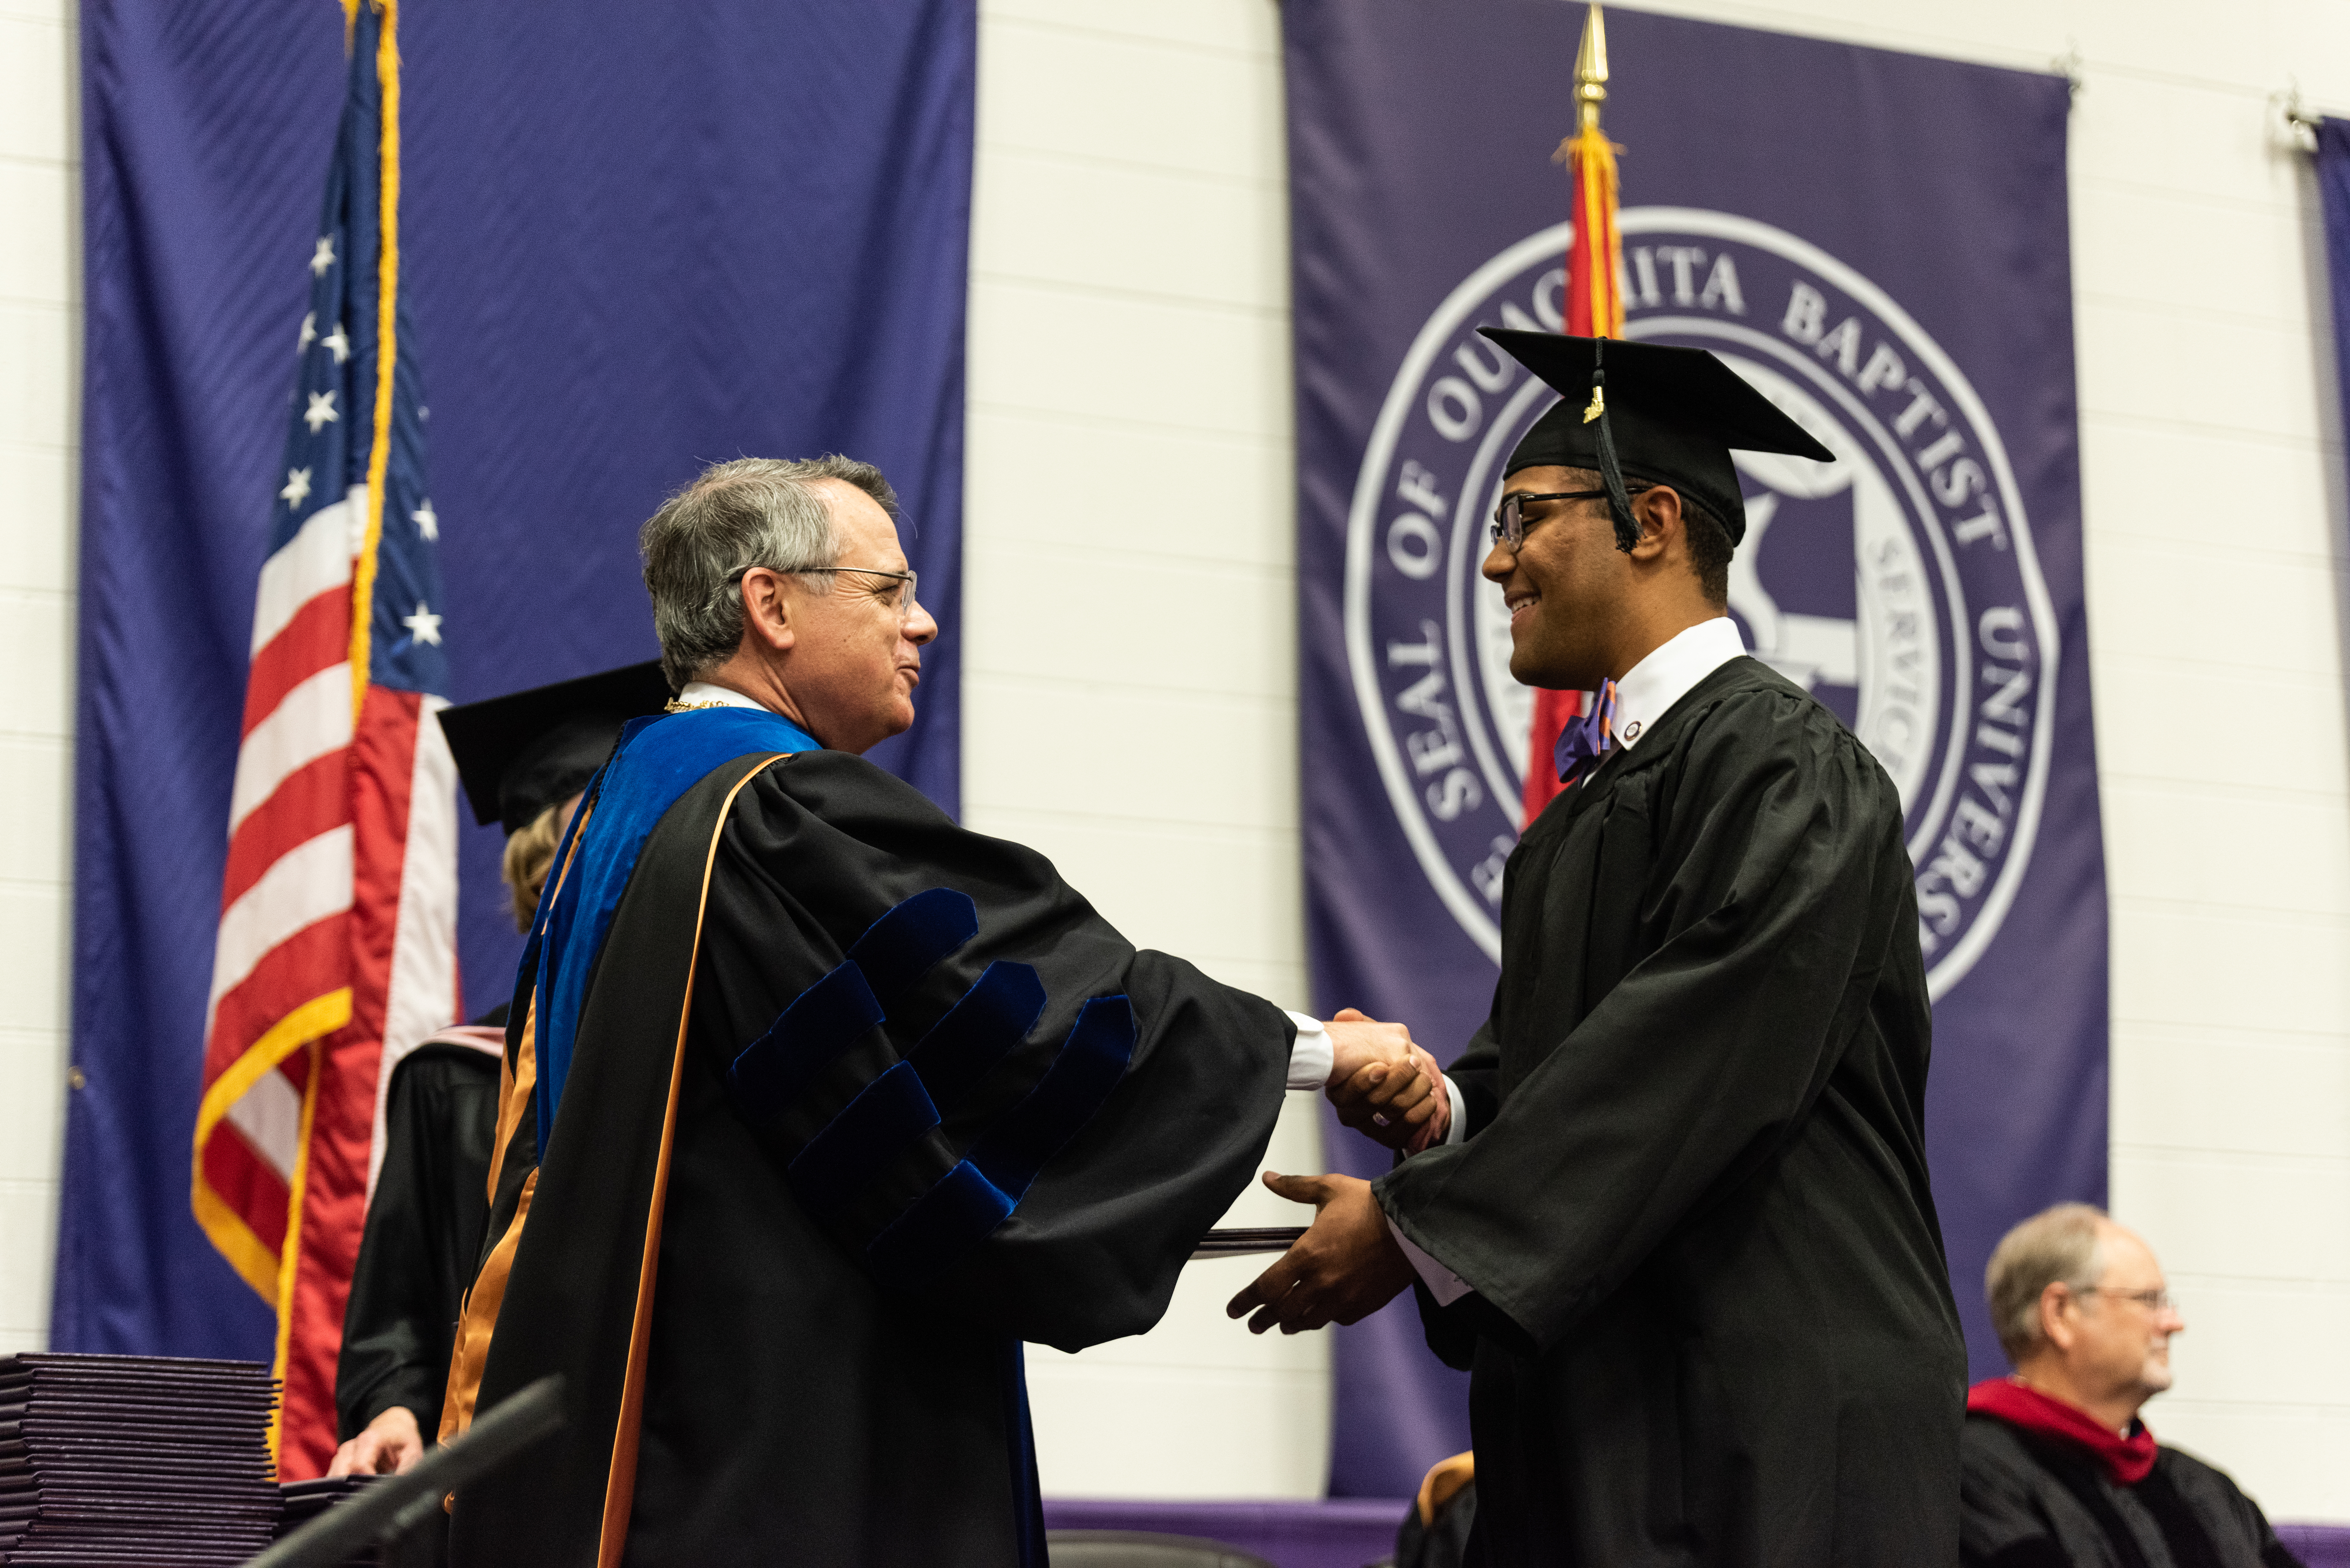 President Ben Sells shakes student's hand at graduation